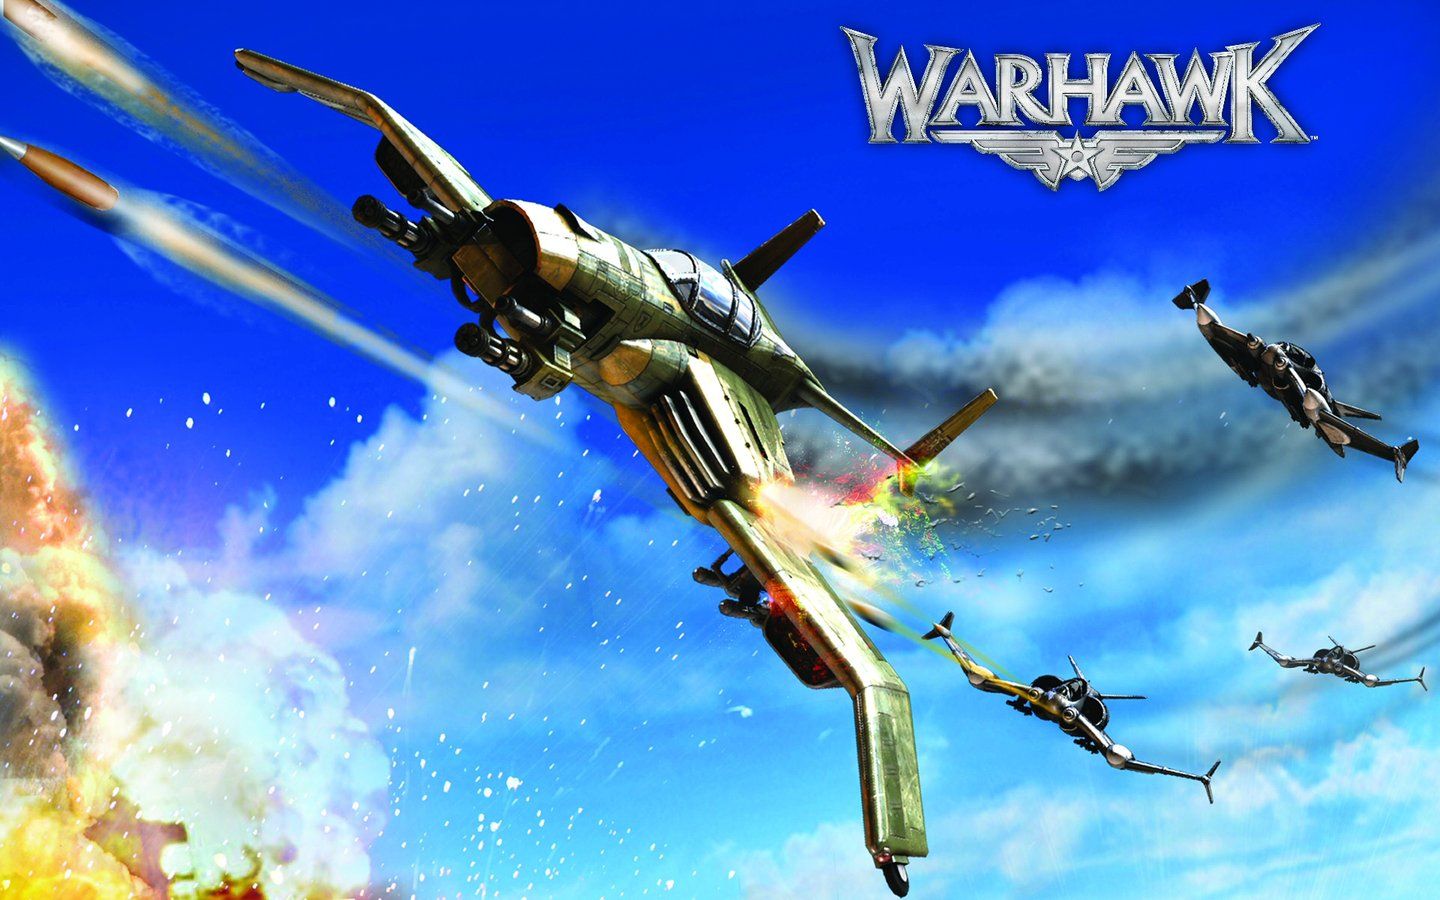 Wallpaper: Warhawk (2 of 6)